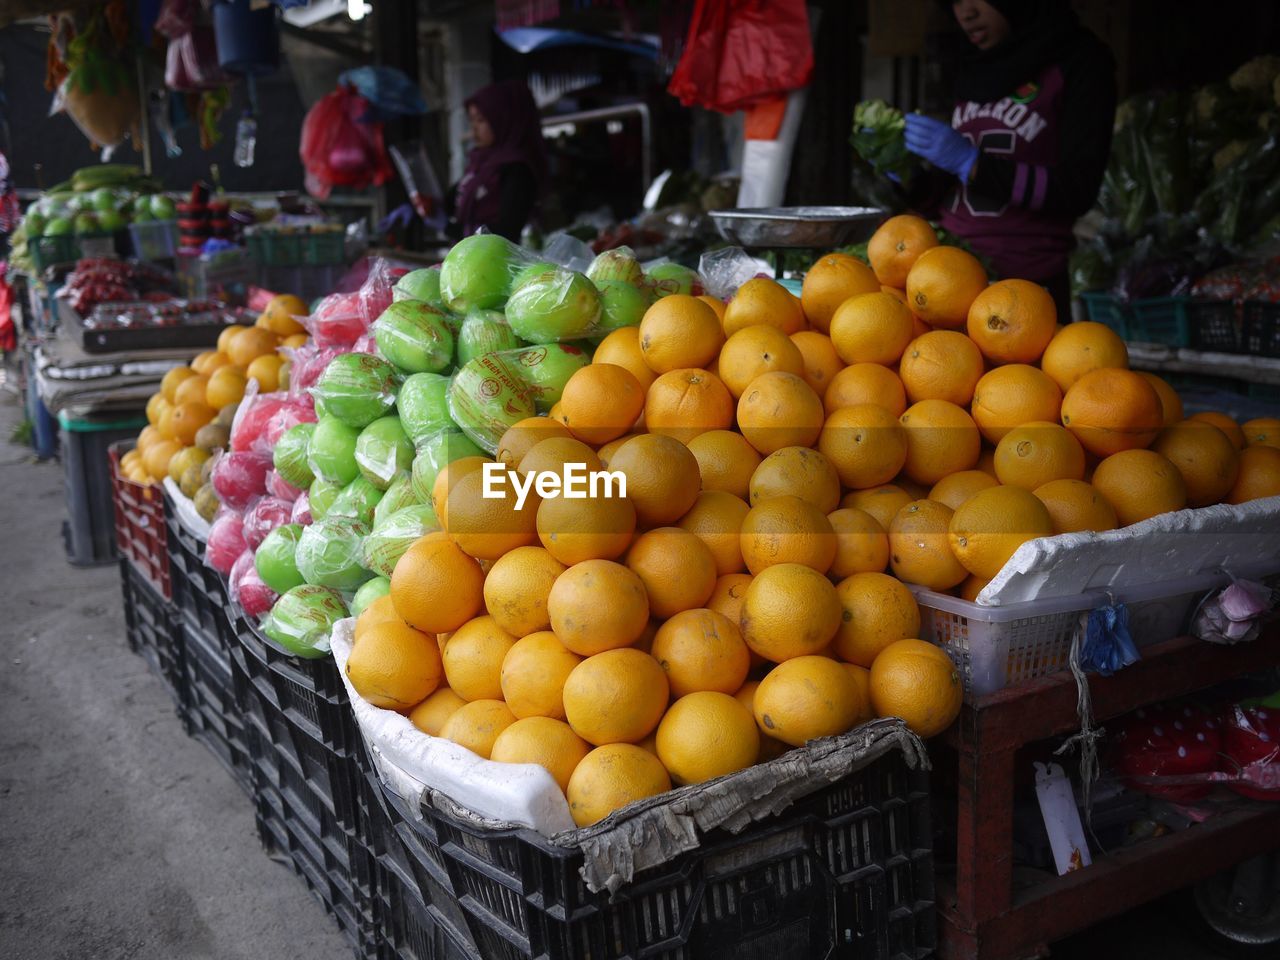 Fruits for sale at market